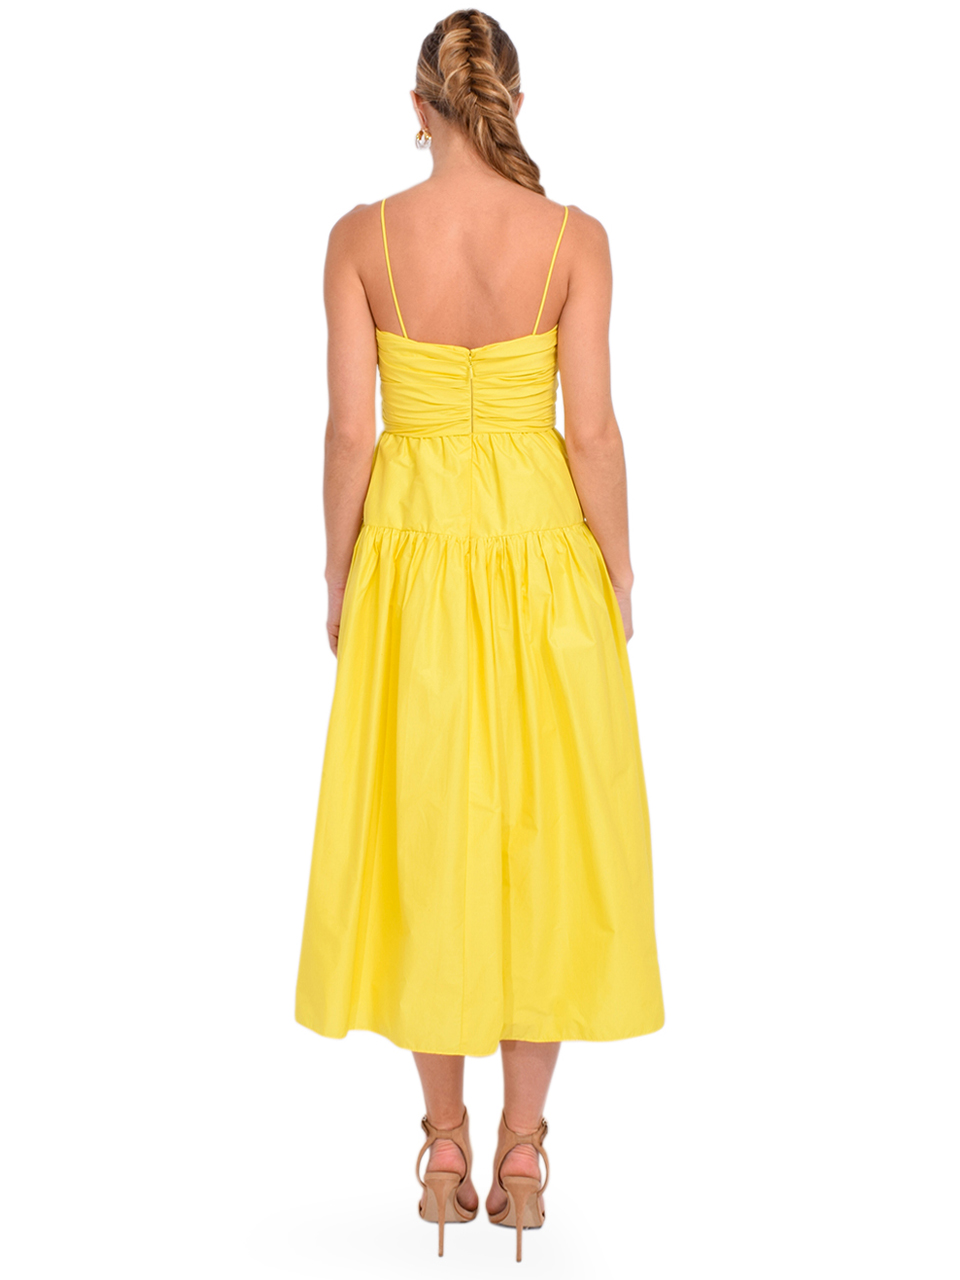 TANYA TAYLOR Jenna Dress in Daffodil Back View 